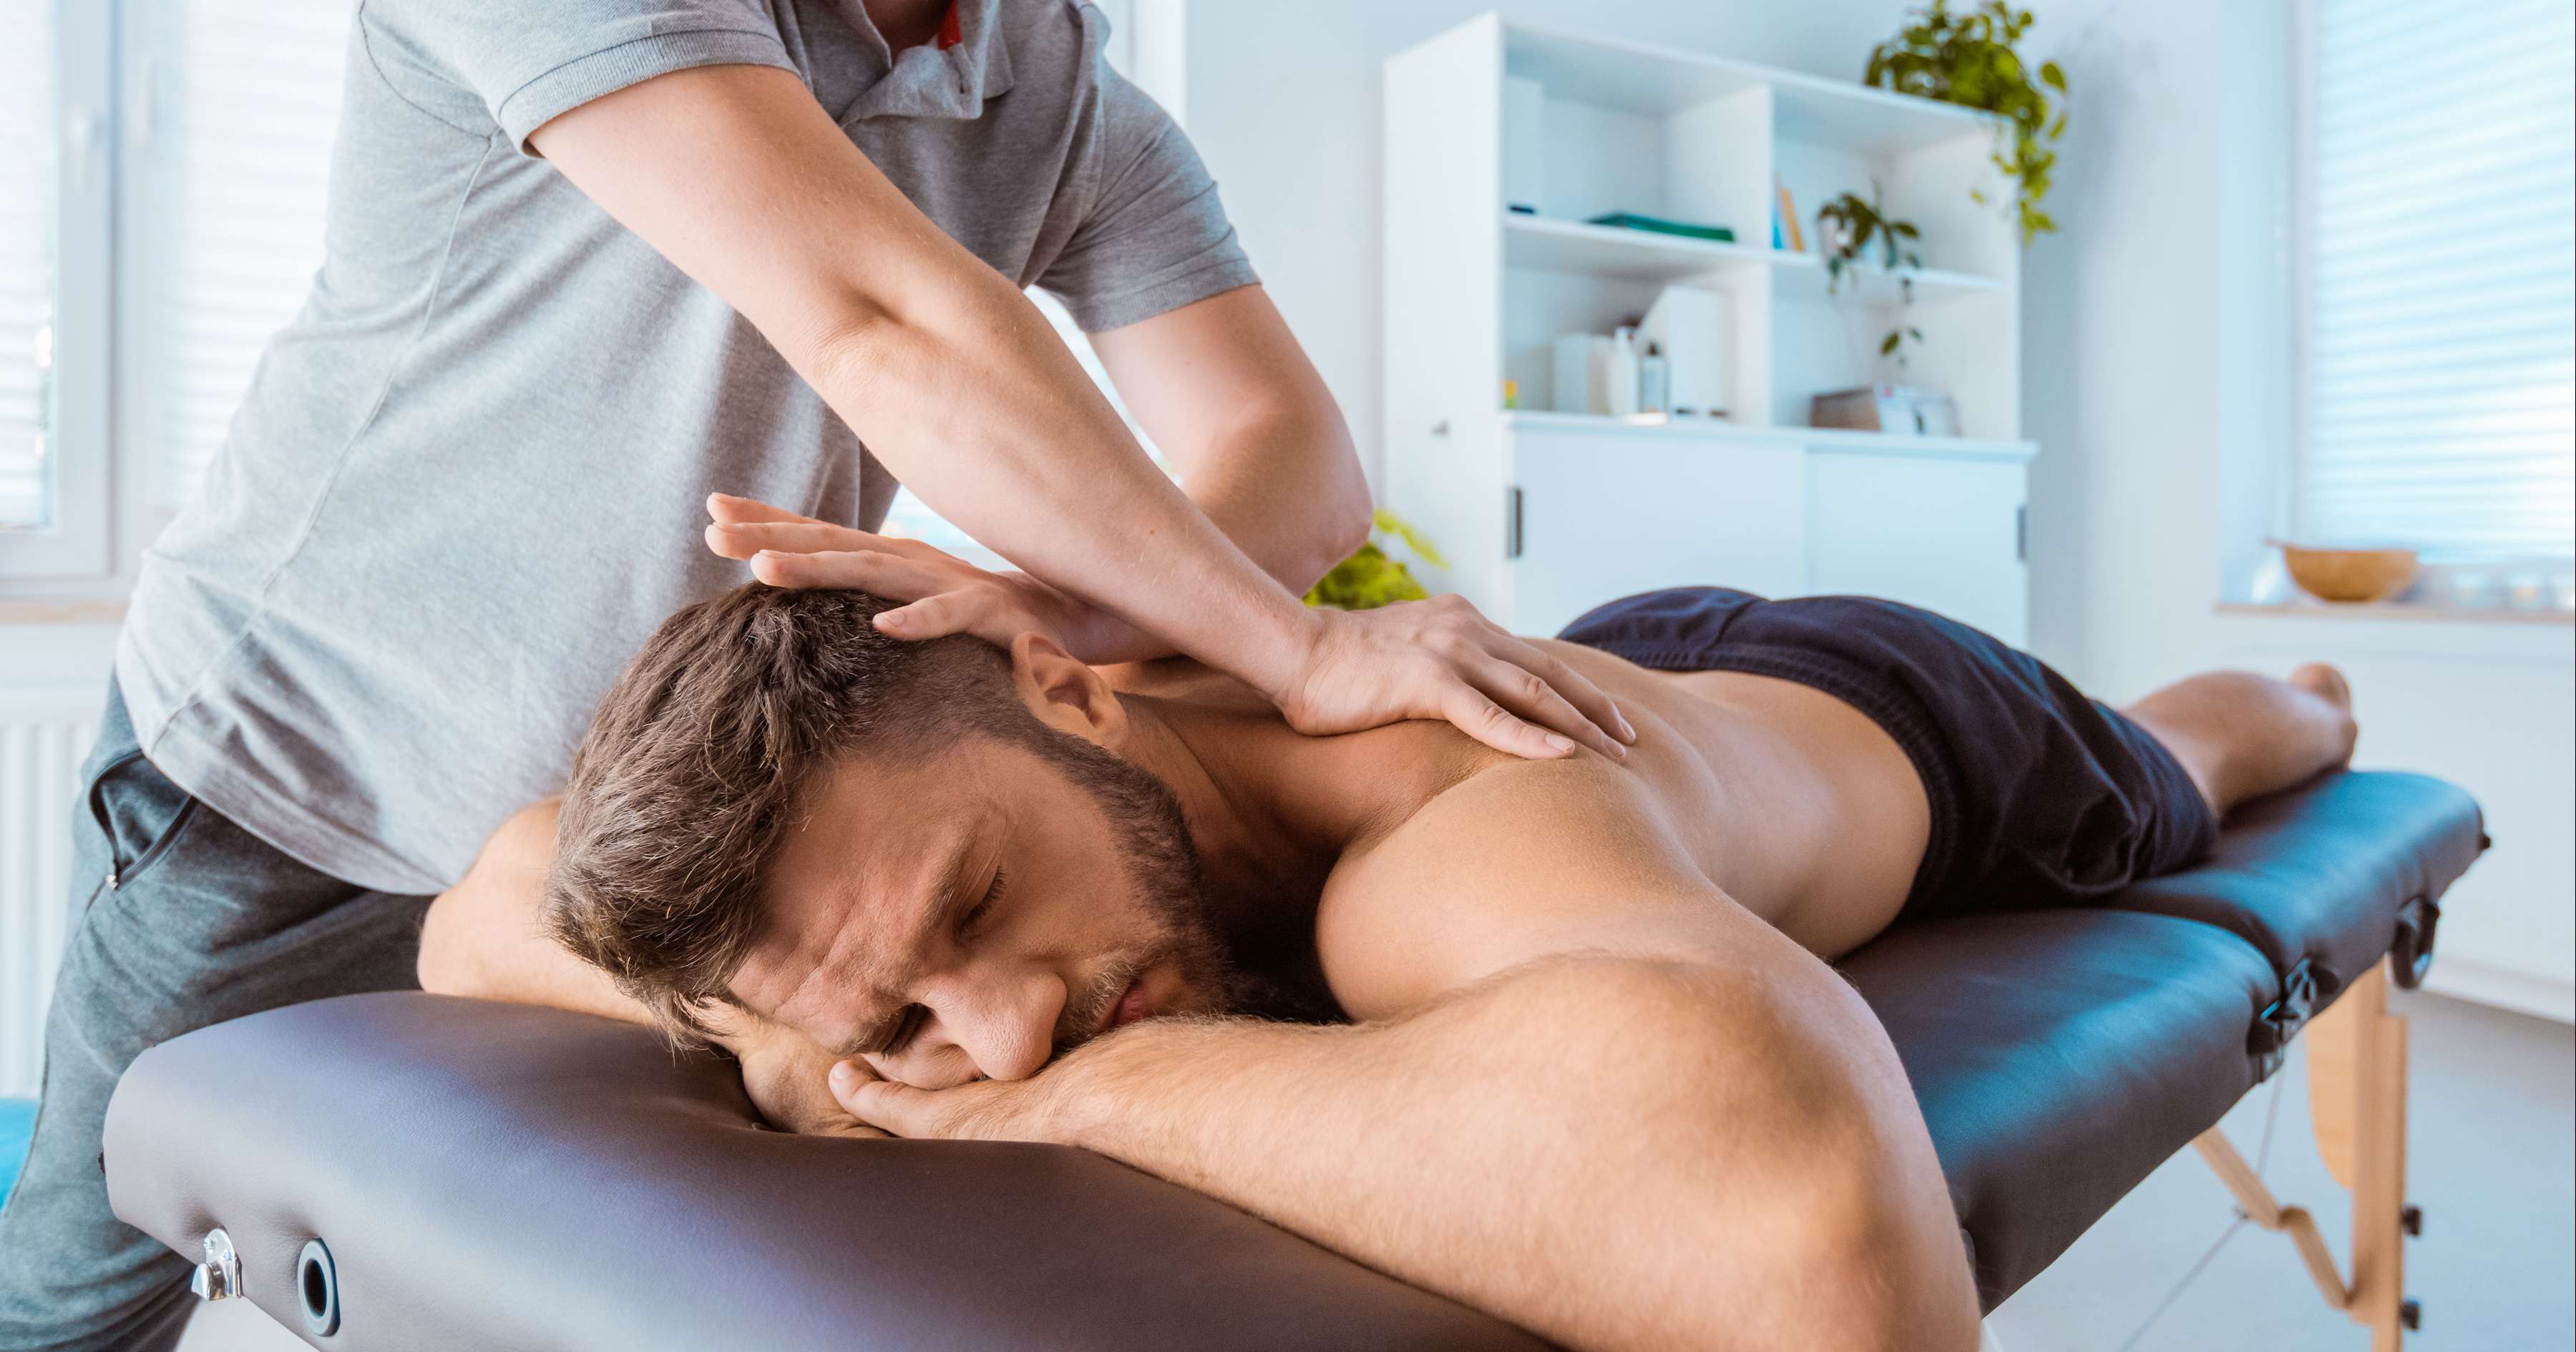 Mp4 massage. Спортивный массаж. Спортивный лечебный массаж. Массажист мужчина. Мужской спортивный массаж.